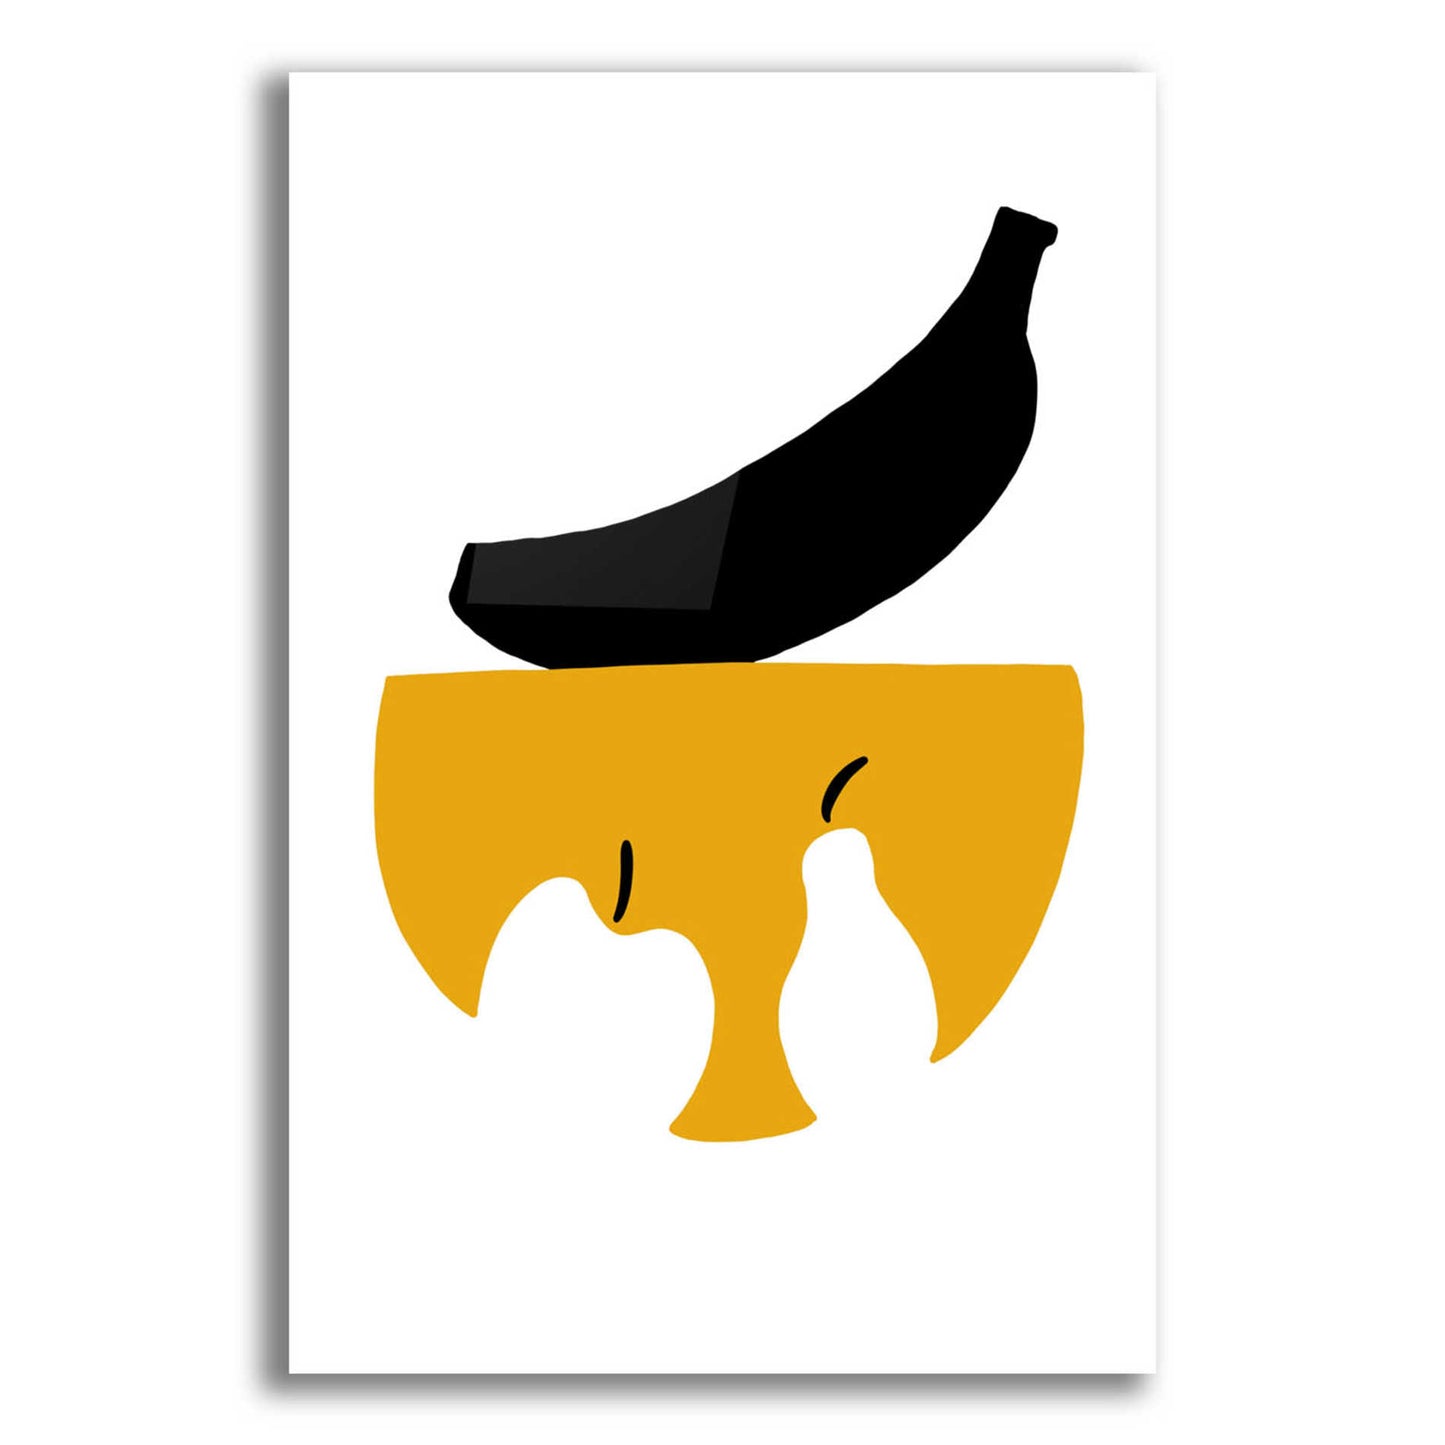 Epic Art 'Still Life with Black Banana' by Cesare Bellassai, Acrylic Glass Wall Art,12x18x1.1x0,18x26x1.1x0,26x40x1.74x0,40x60x1.74x0